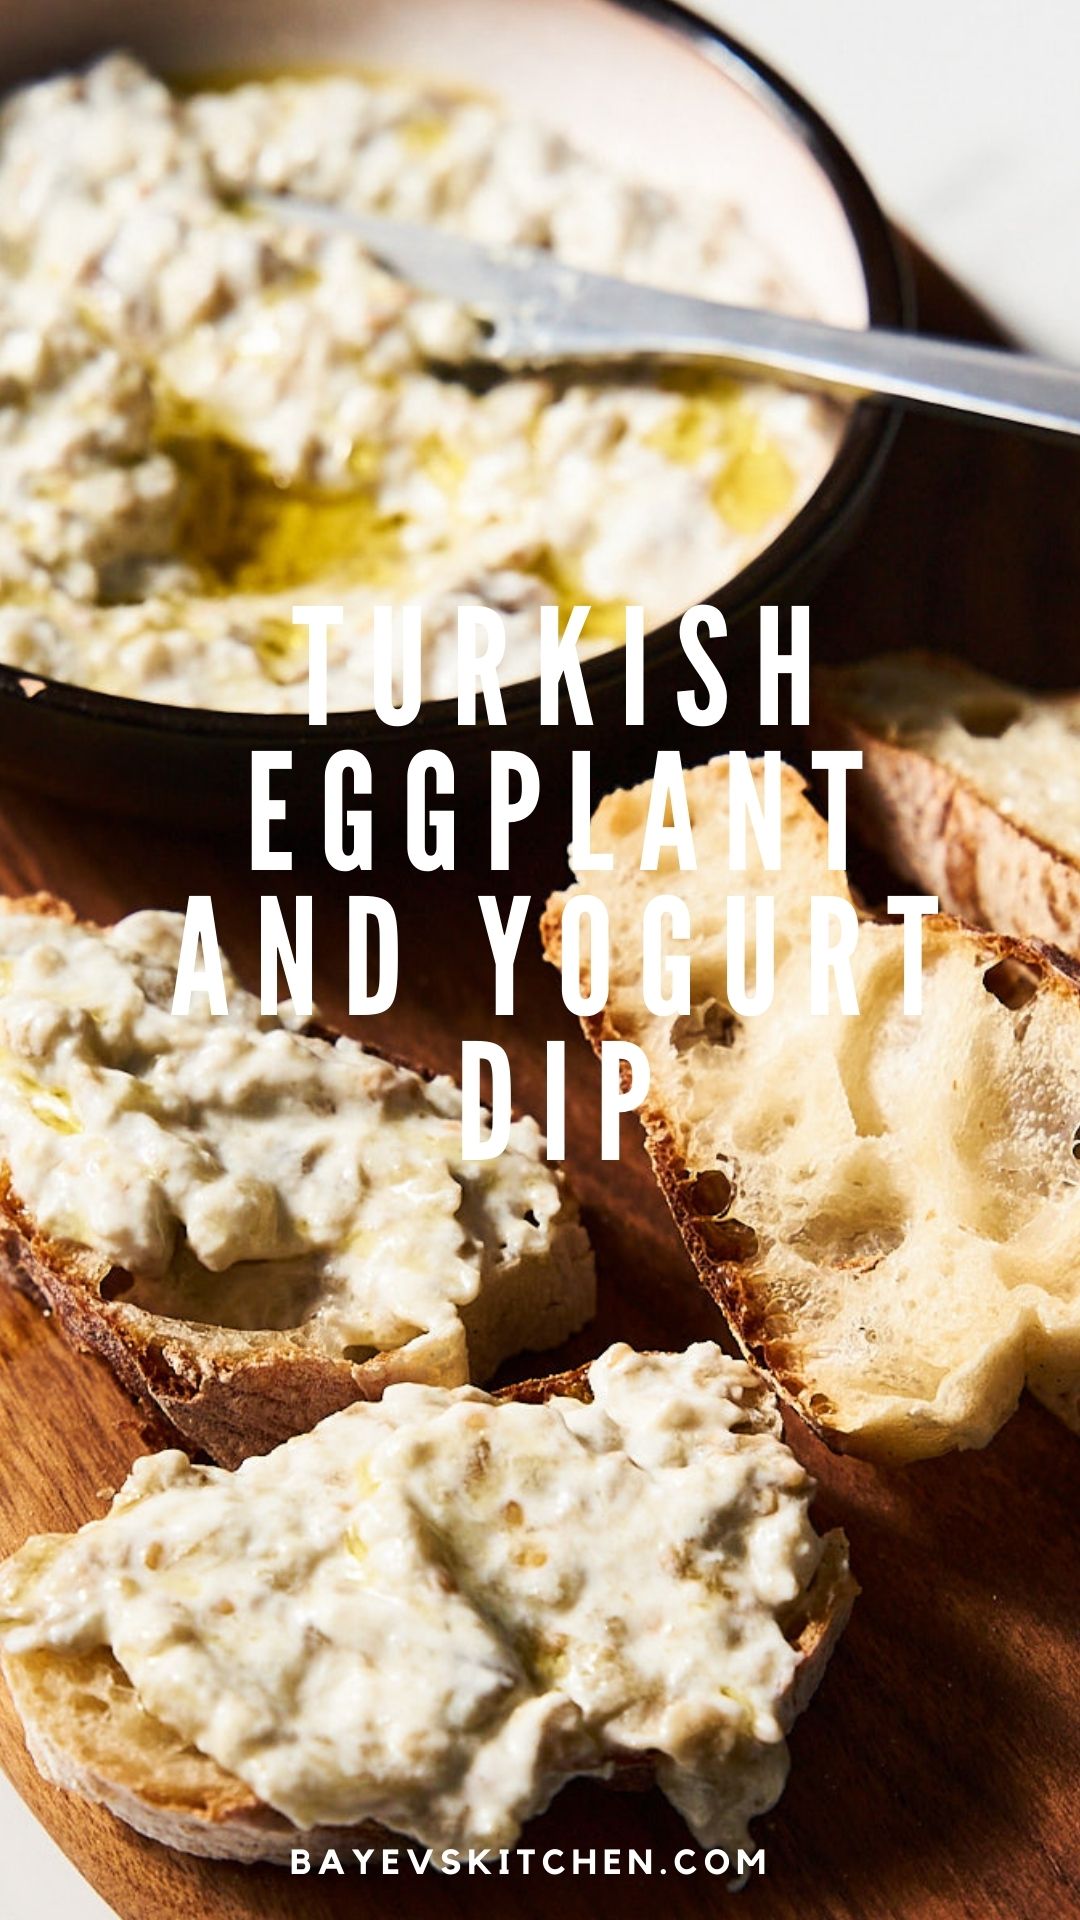 Turkish eggplant and yogurt dip by bayevskitchen.com